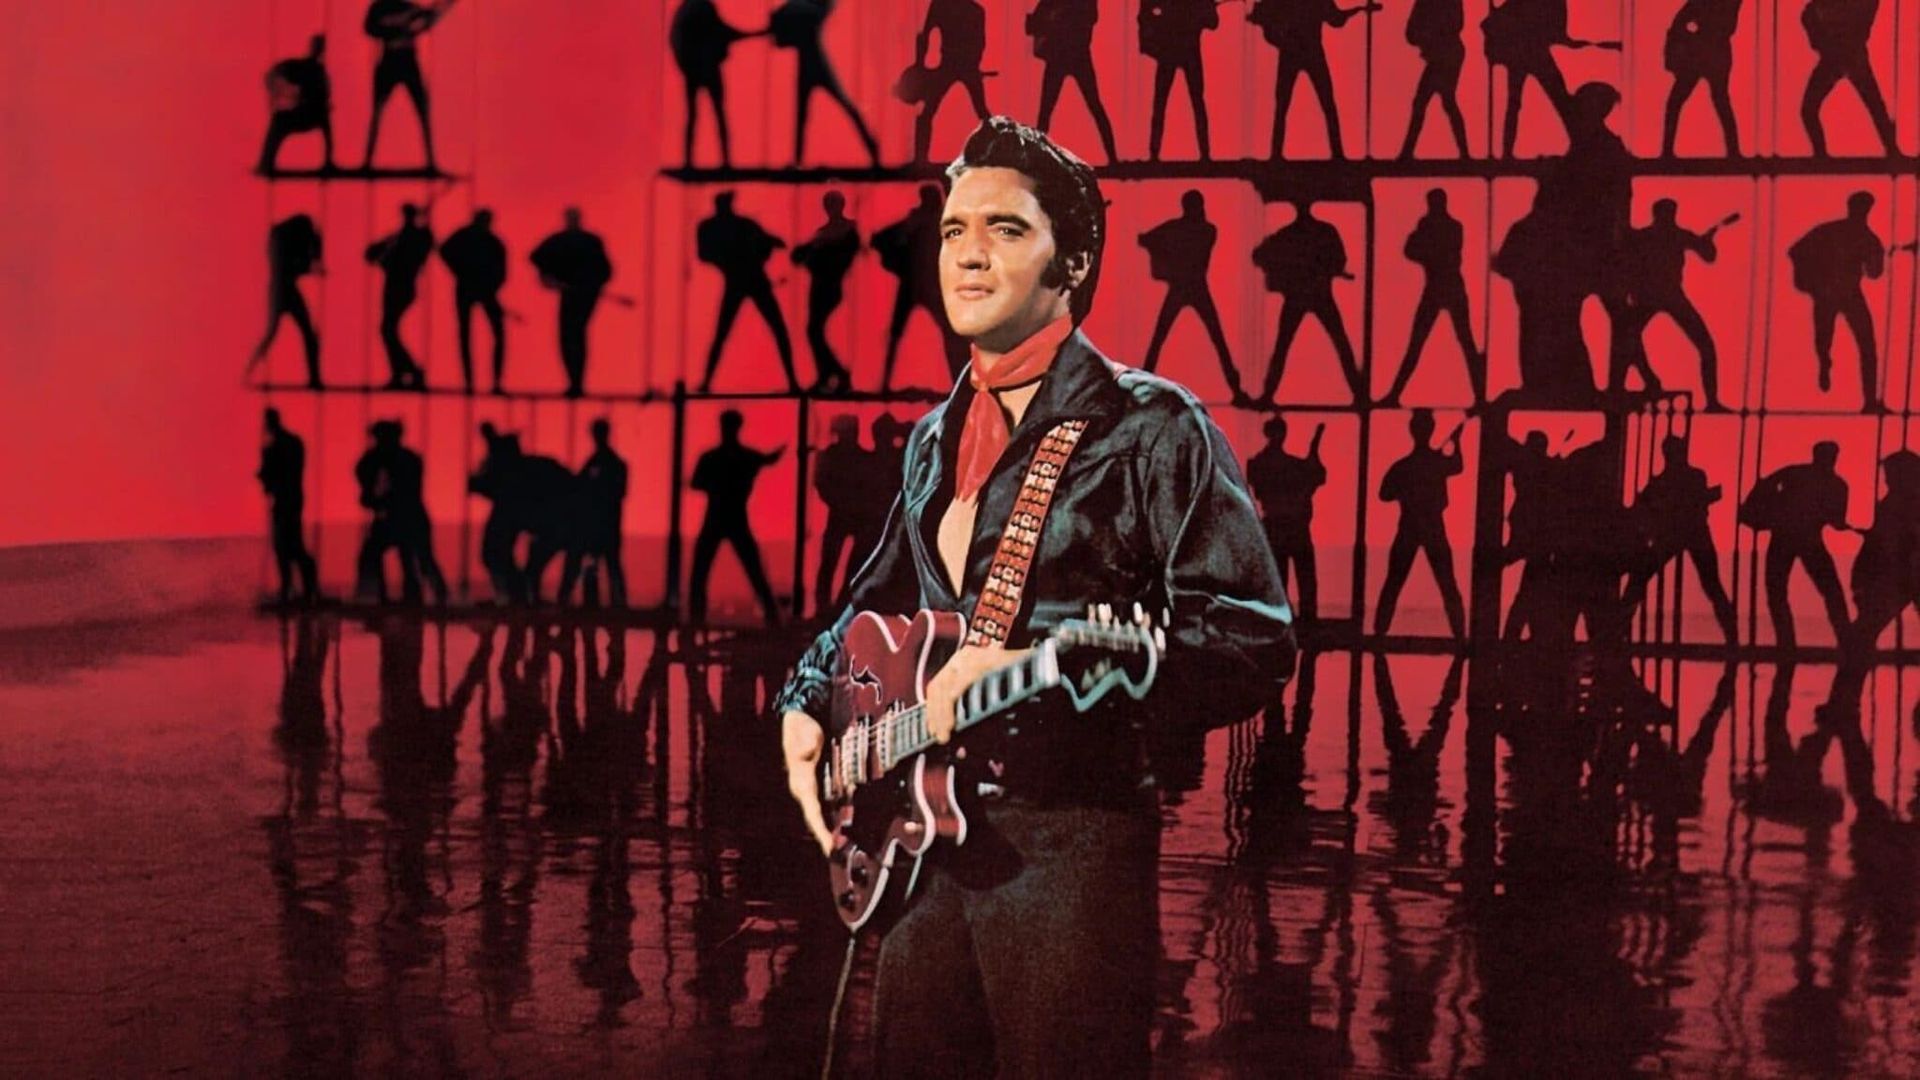 Reinventing Elvis: The '68 Comeback background